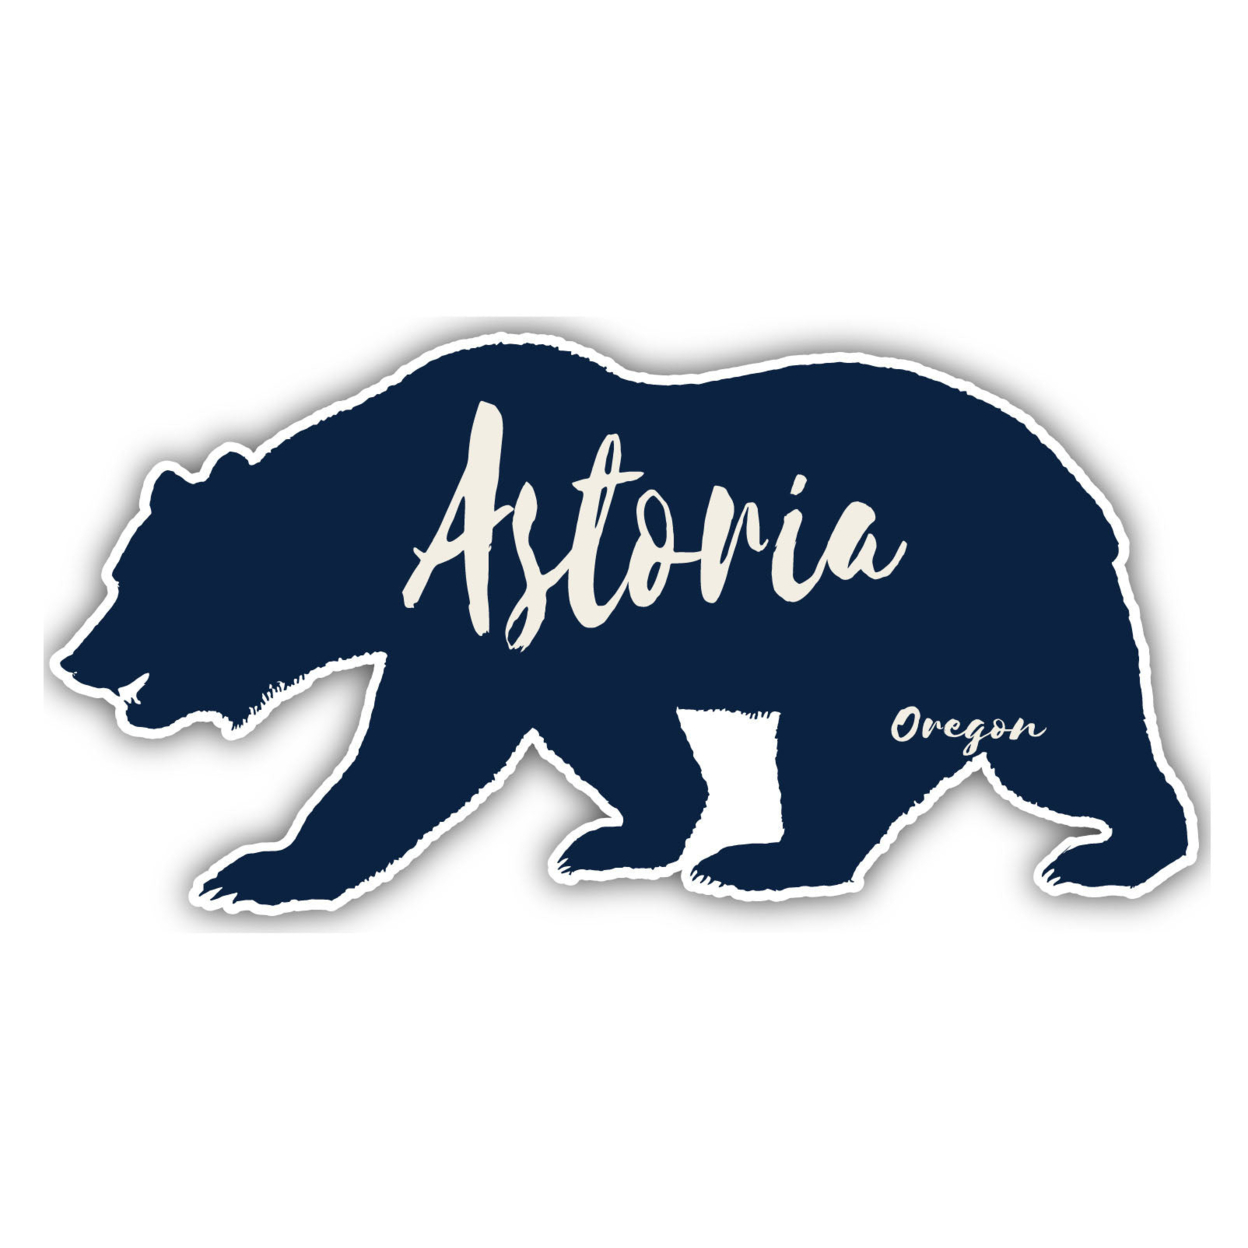 Astoria Oregon Souvenir Decorative Stickers (Choose Theme And Size) - 4-Pack, 2-Inch, Bear